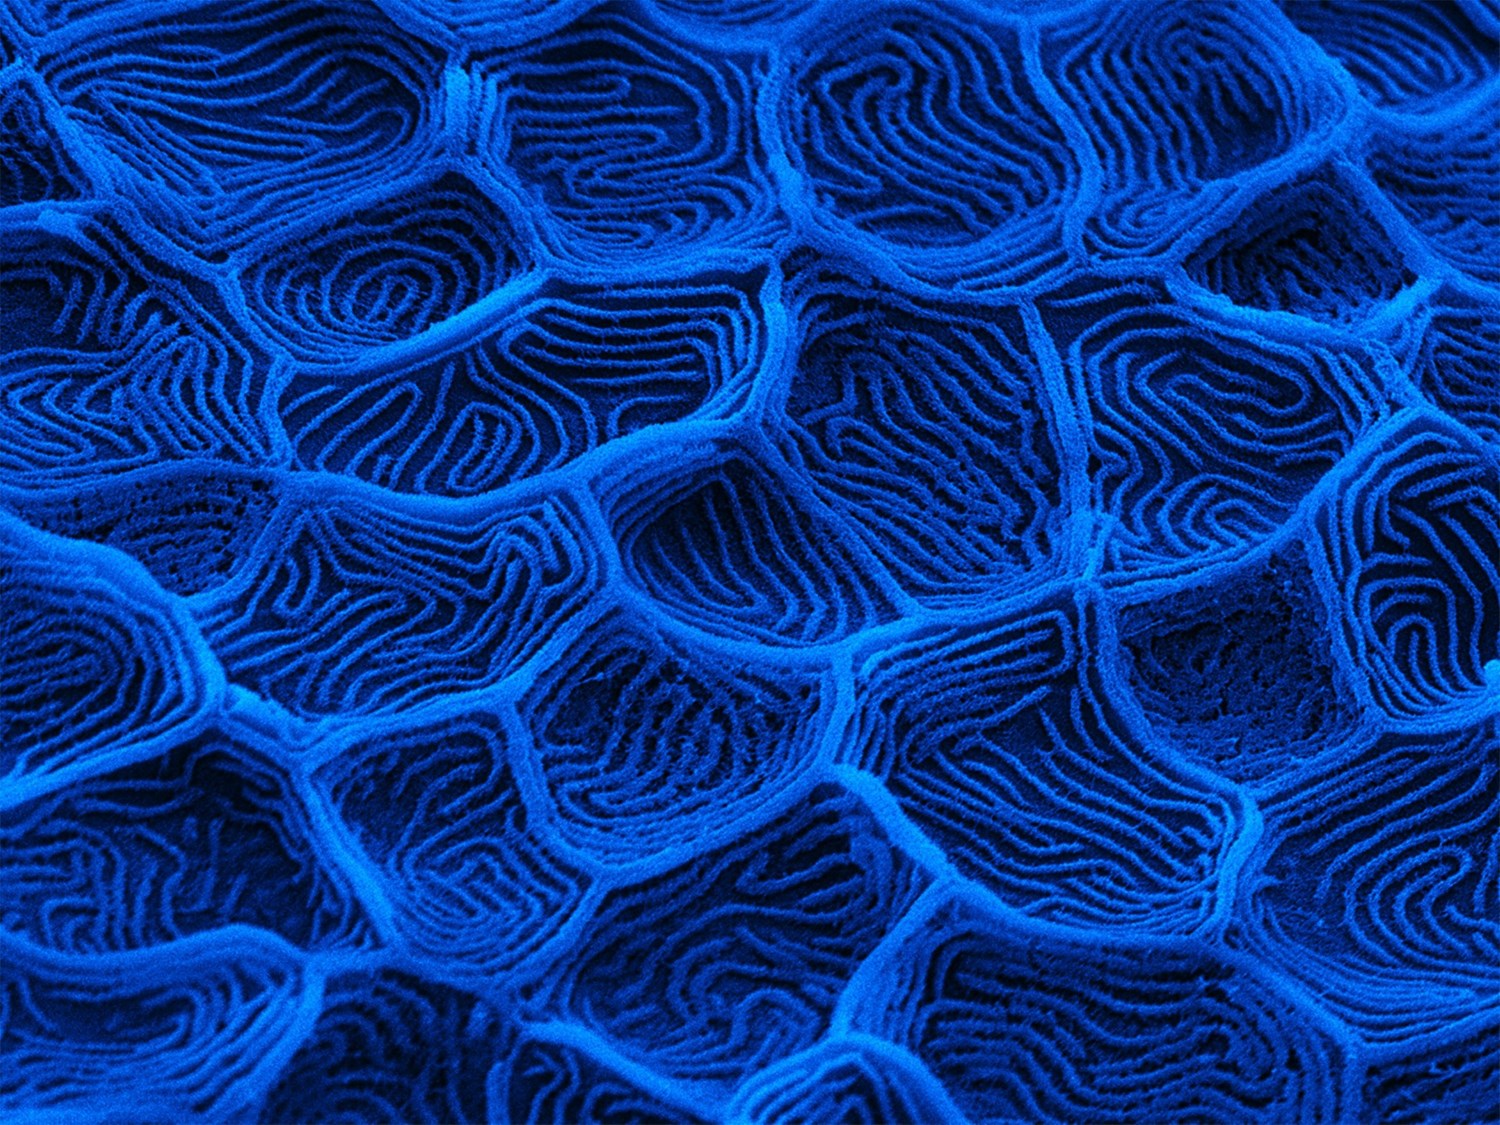 Microscopic image of fish skin, coloured dark blue